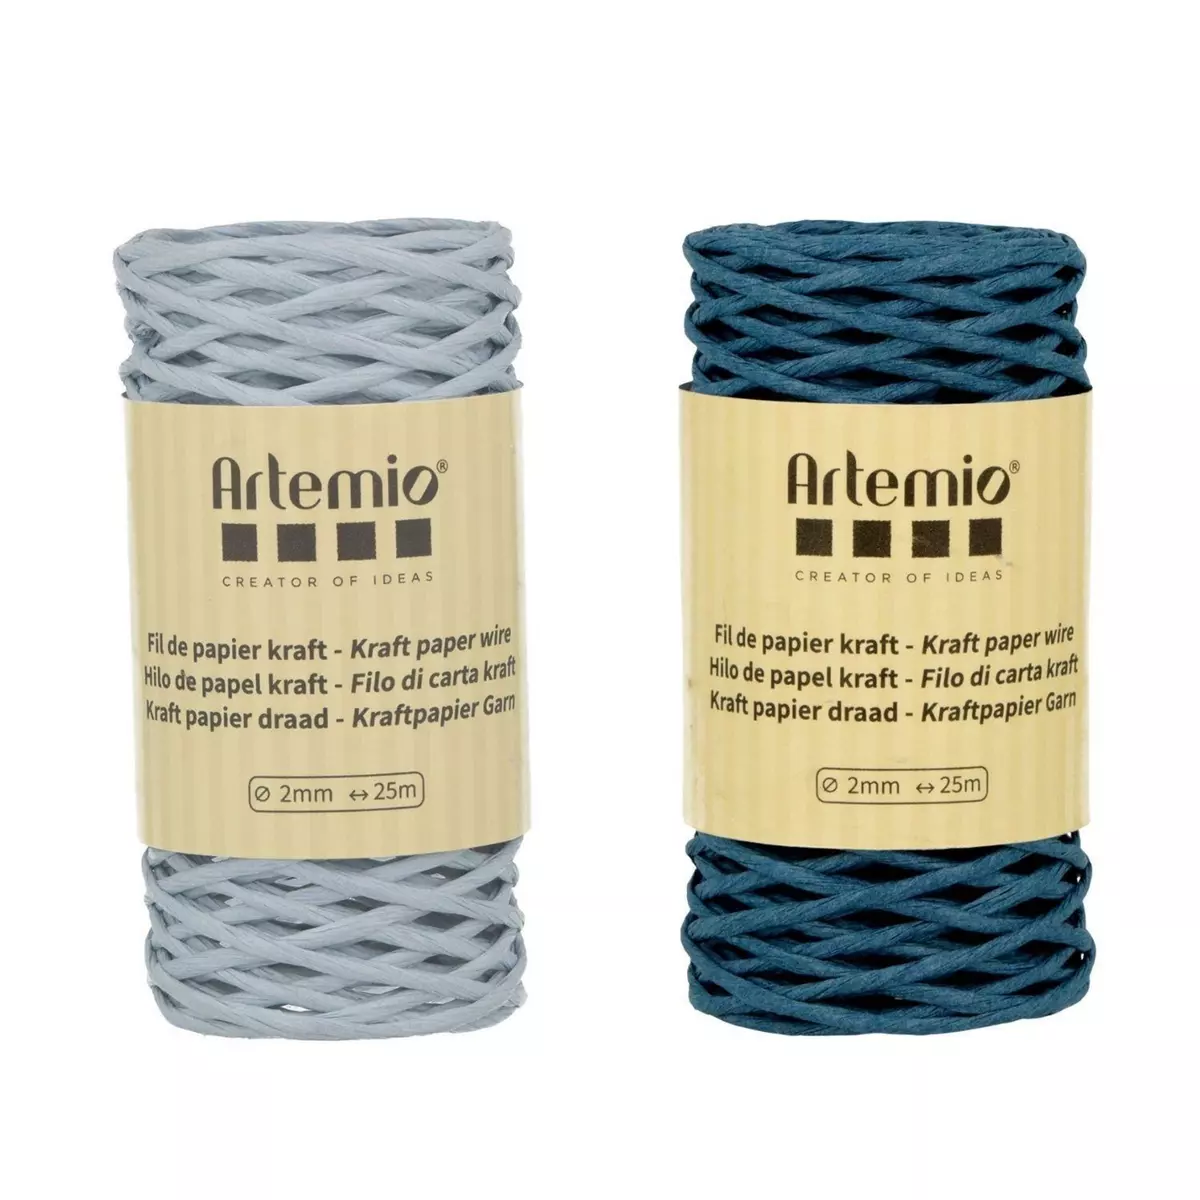 Artemio 2 bobines fil kraft bleu tendre/ bleu azur 2mm x 25 m